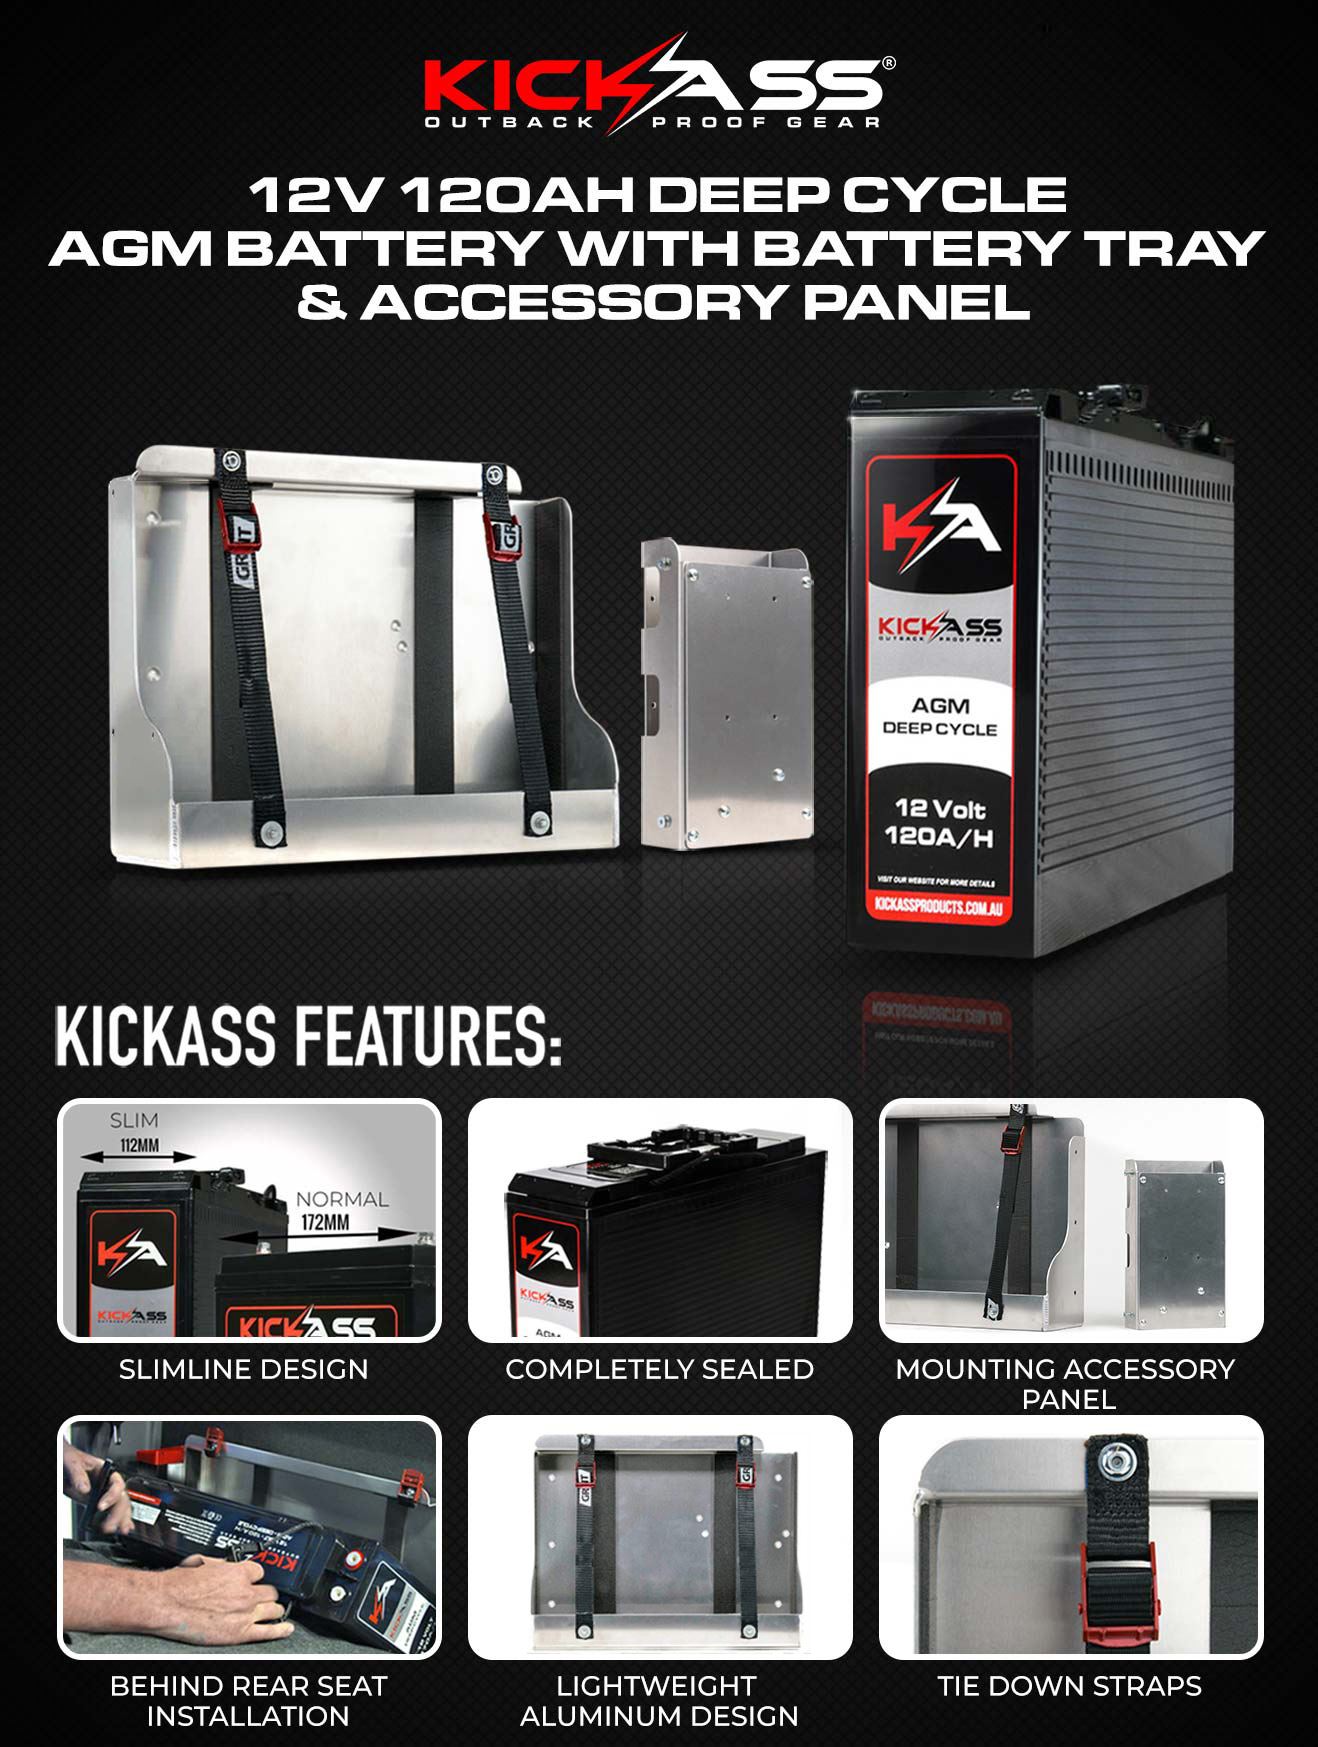 KICKASS 12V 120AH Slimline Deep Cycle AGM Battery with Tray & Accessory Panel